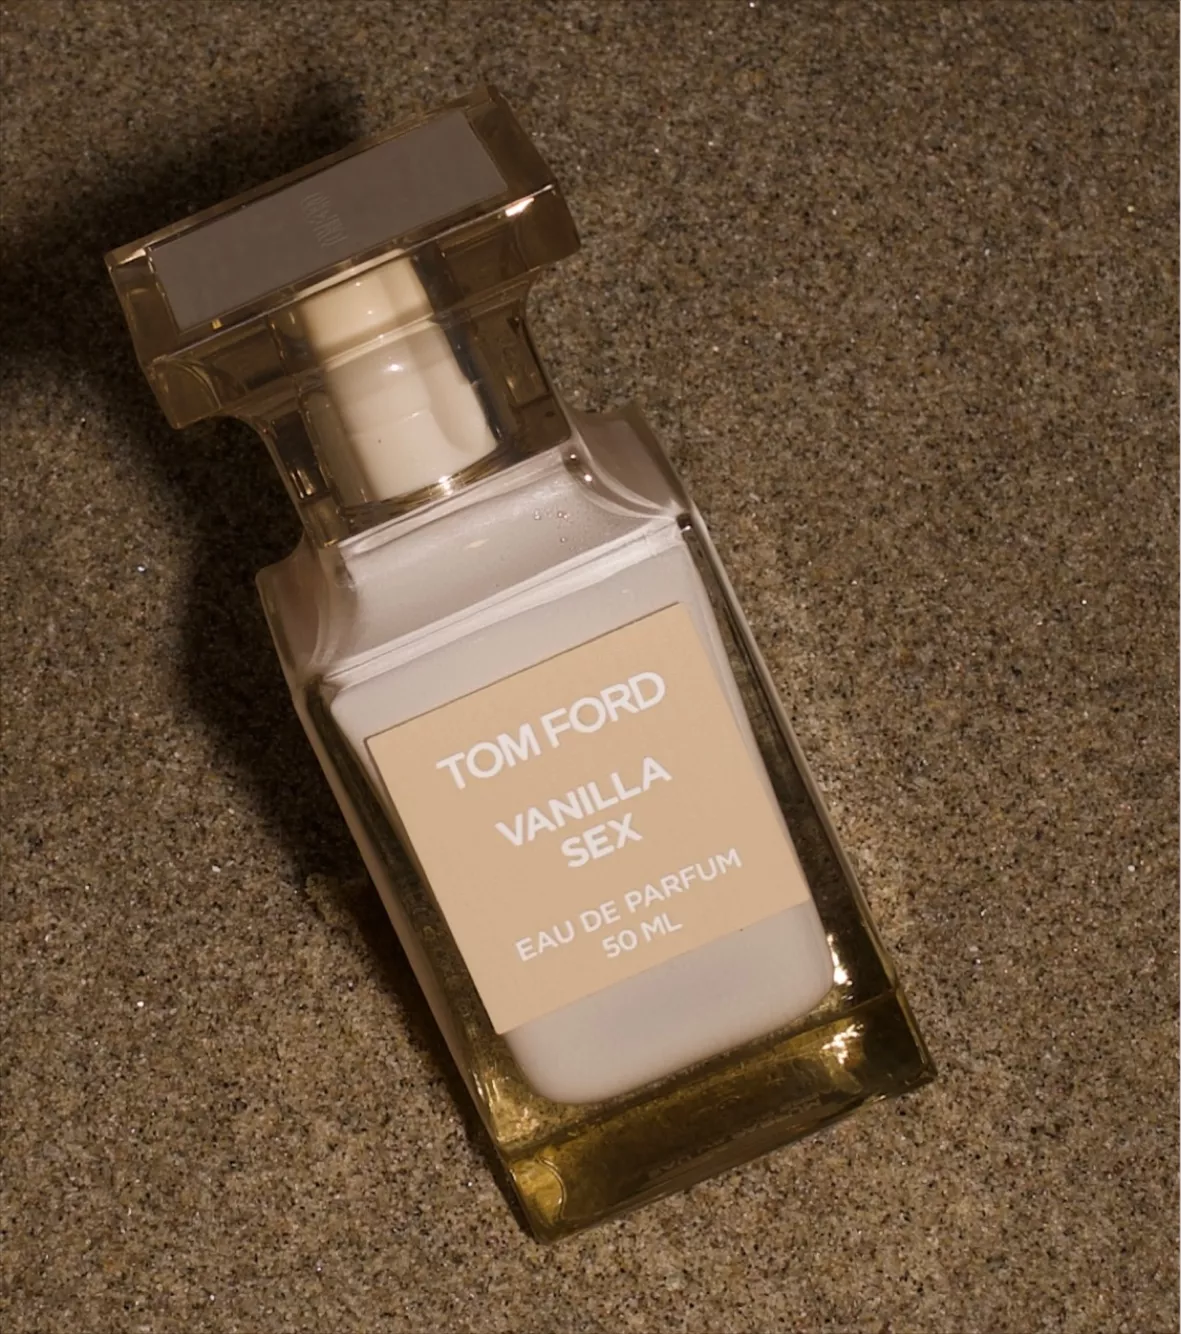 Vanilla Sex Eau de Parfum curated on LTK